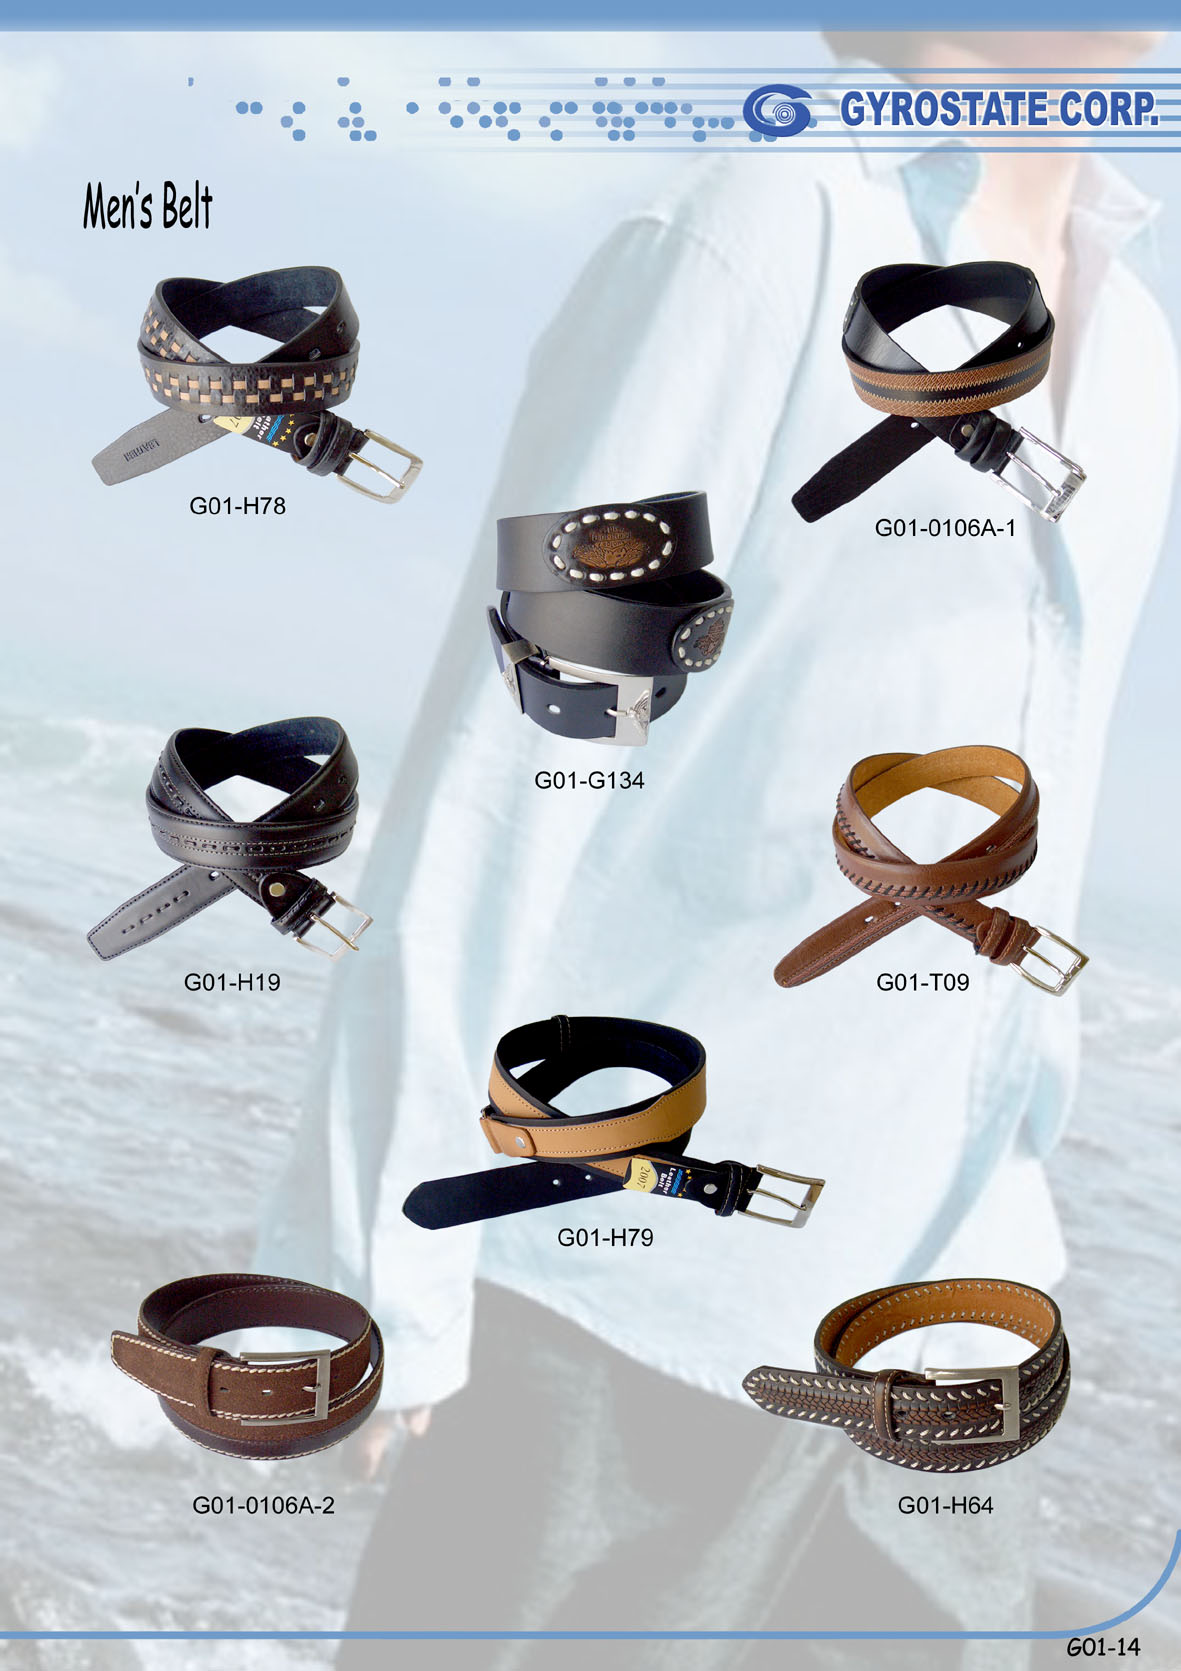 Men's belt G01-14